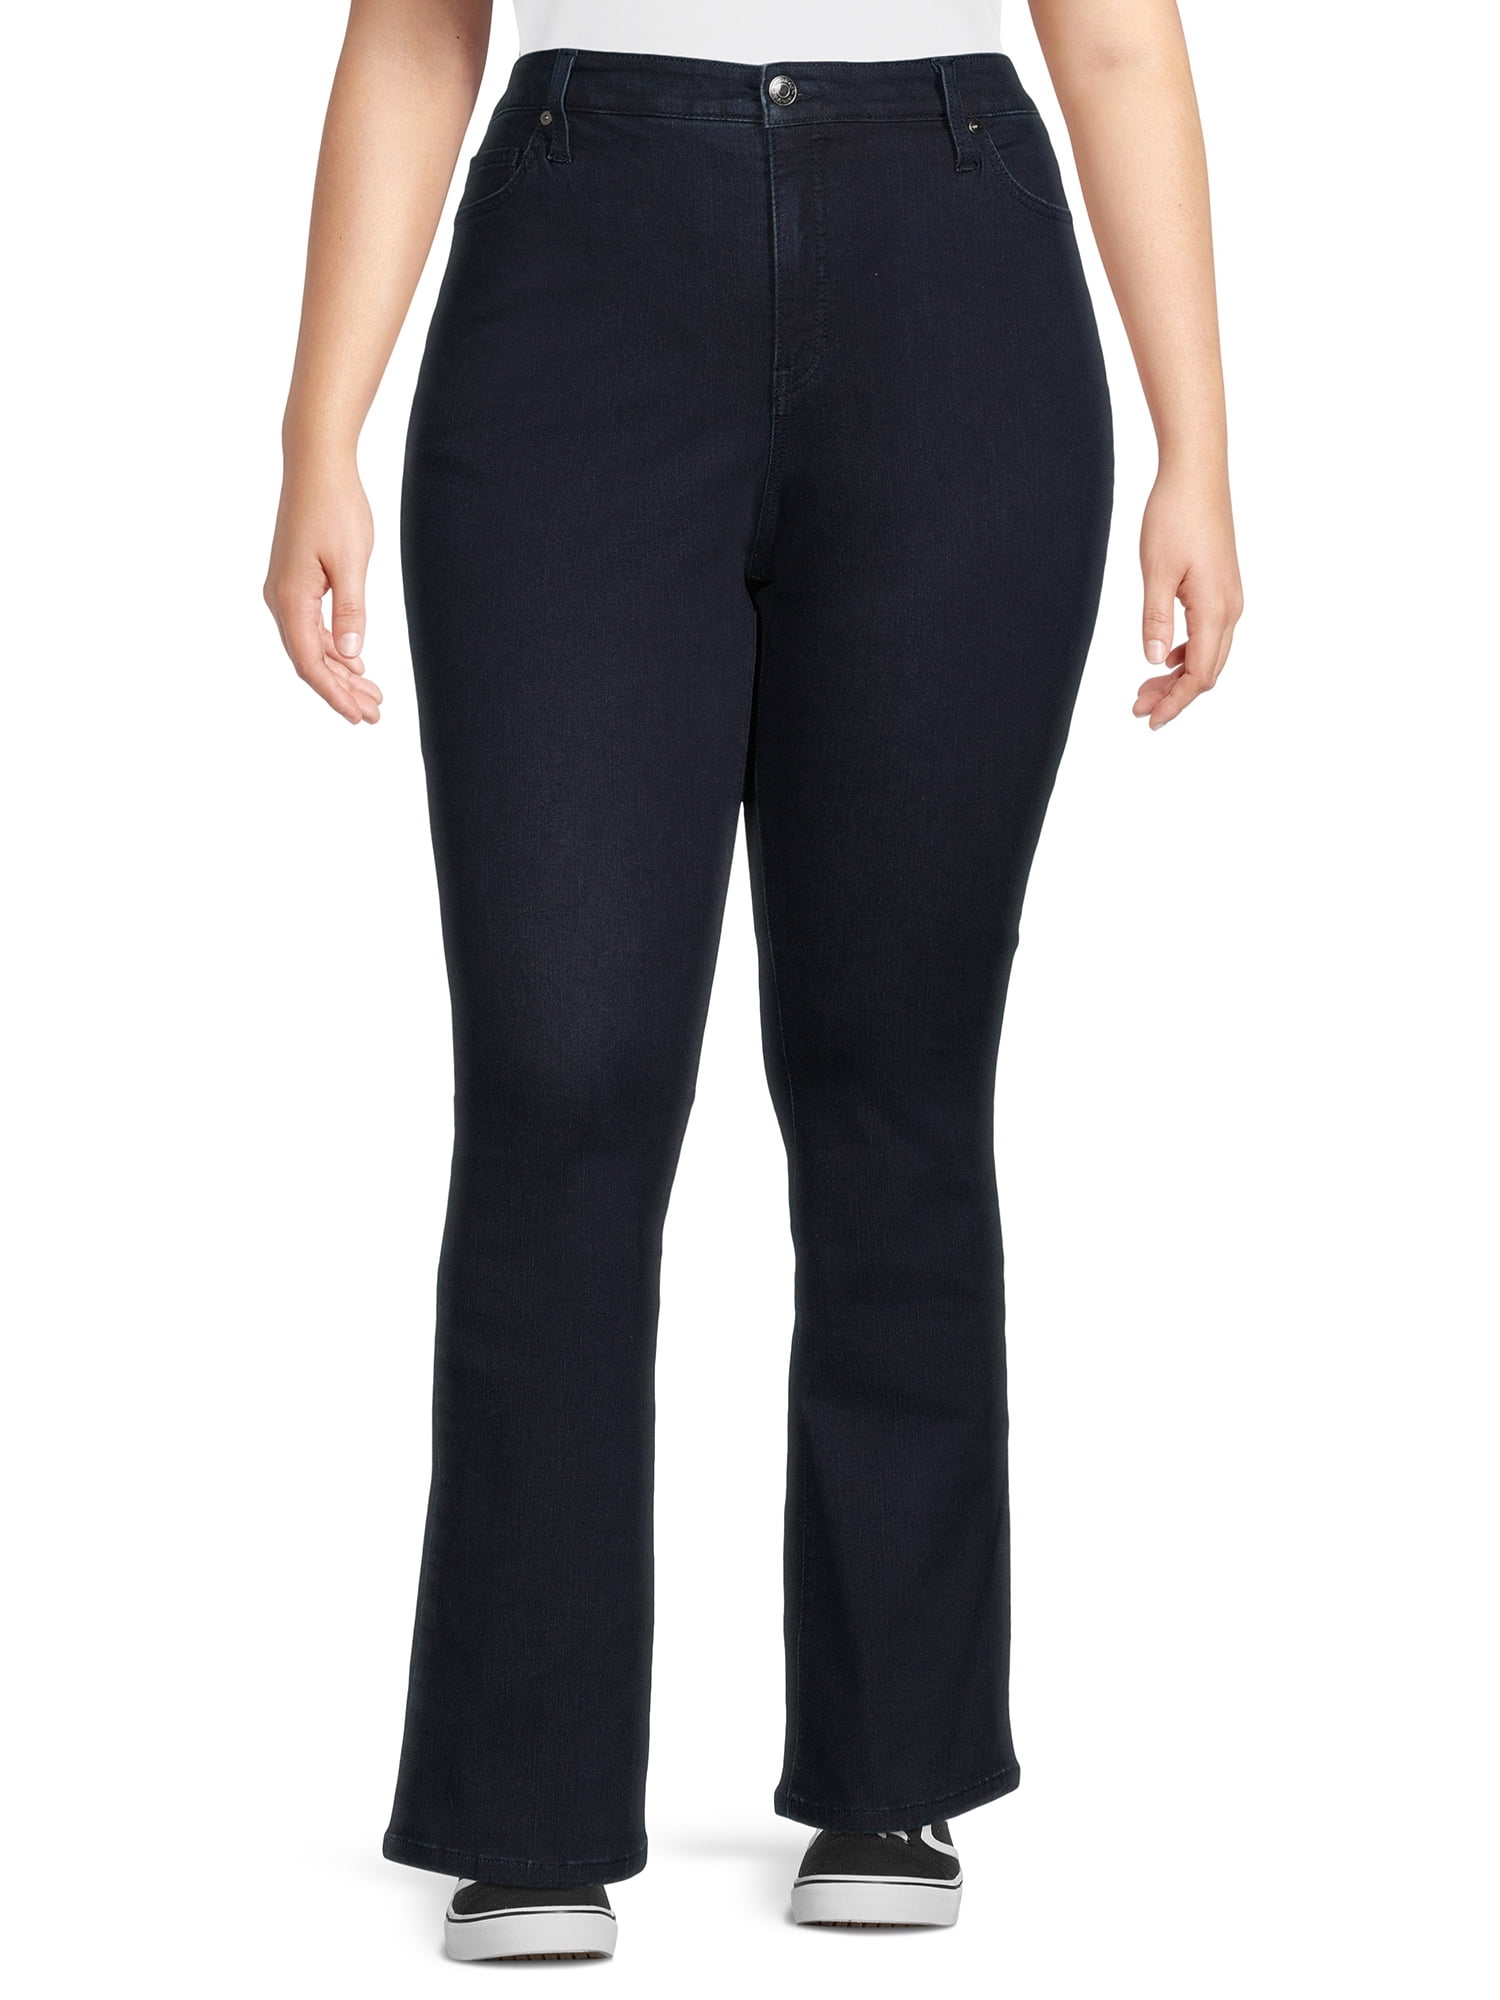 Terra & Sky Women's Plus Size Bootcut Jeans - Walmart.com